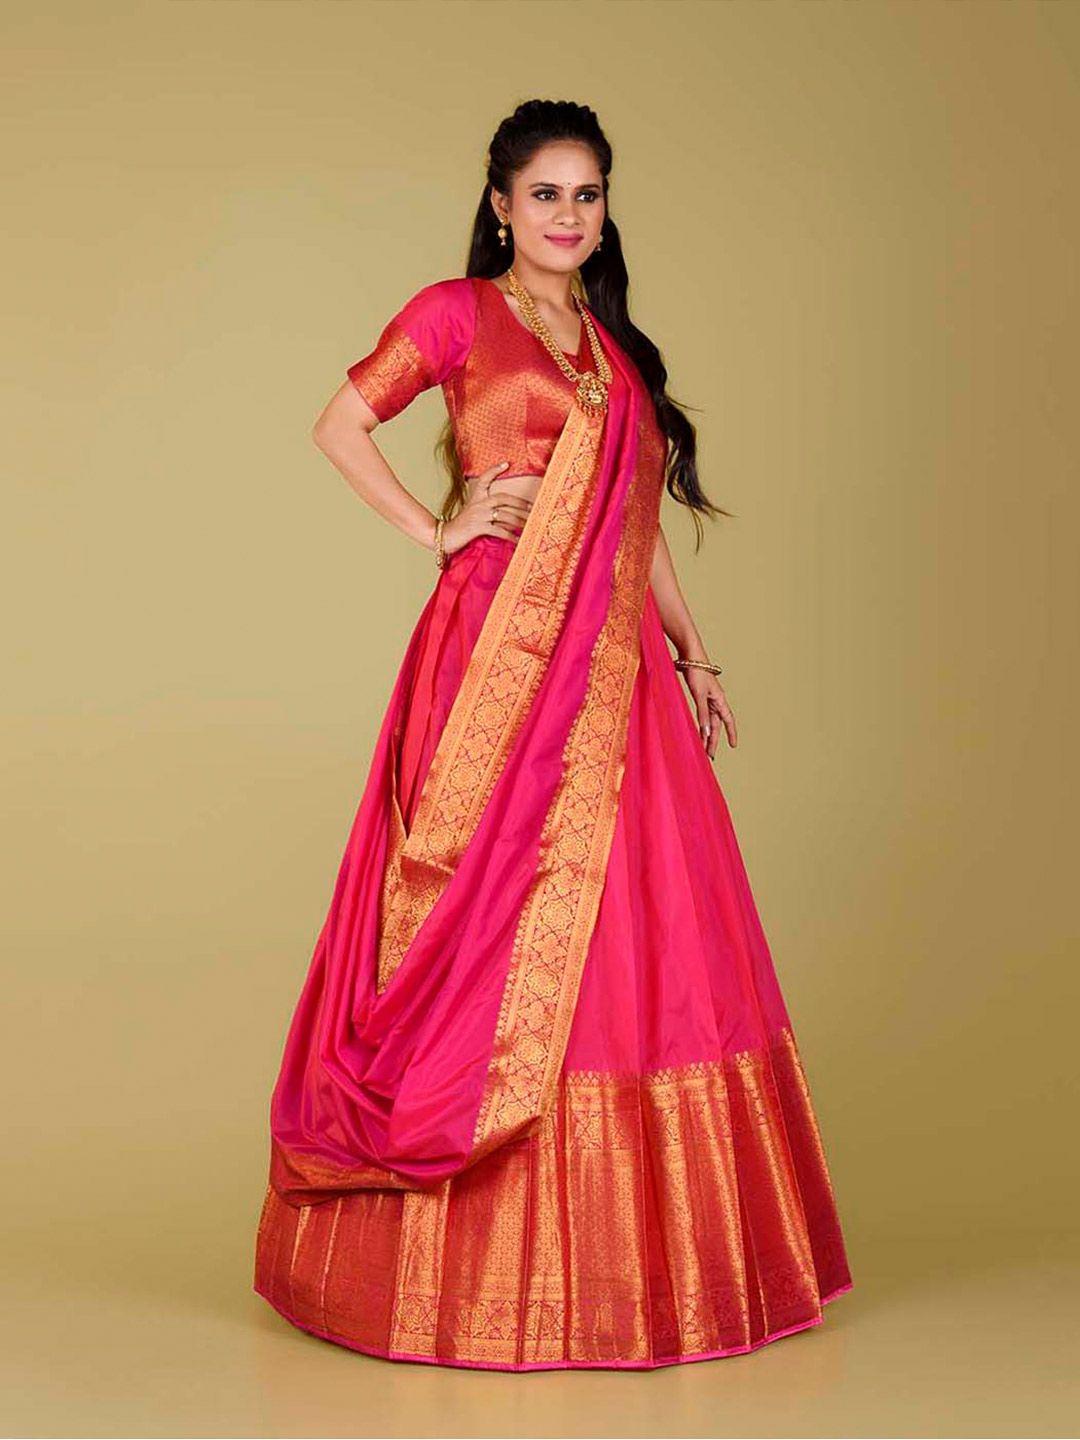 halfsaree studio pink & gold-toned semi-stitched lehenga & unstitched blouse with dupatta